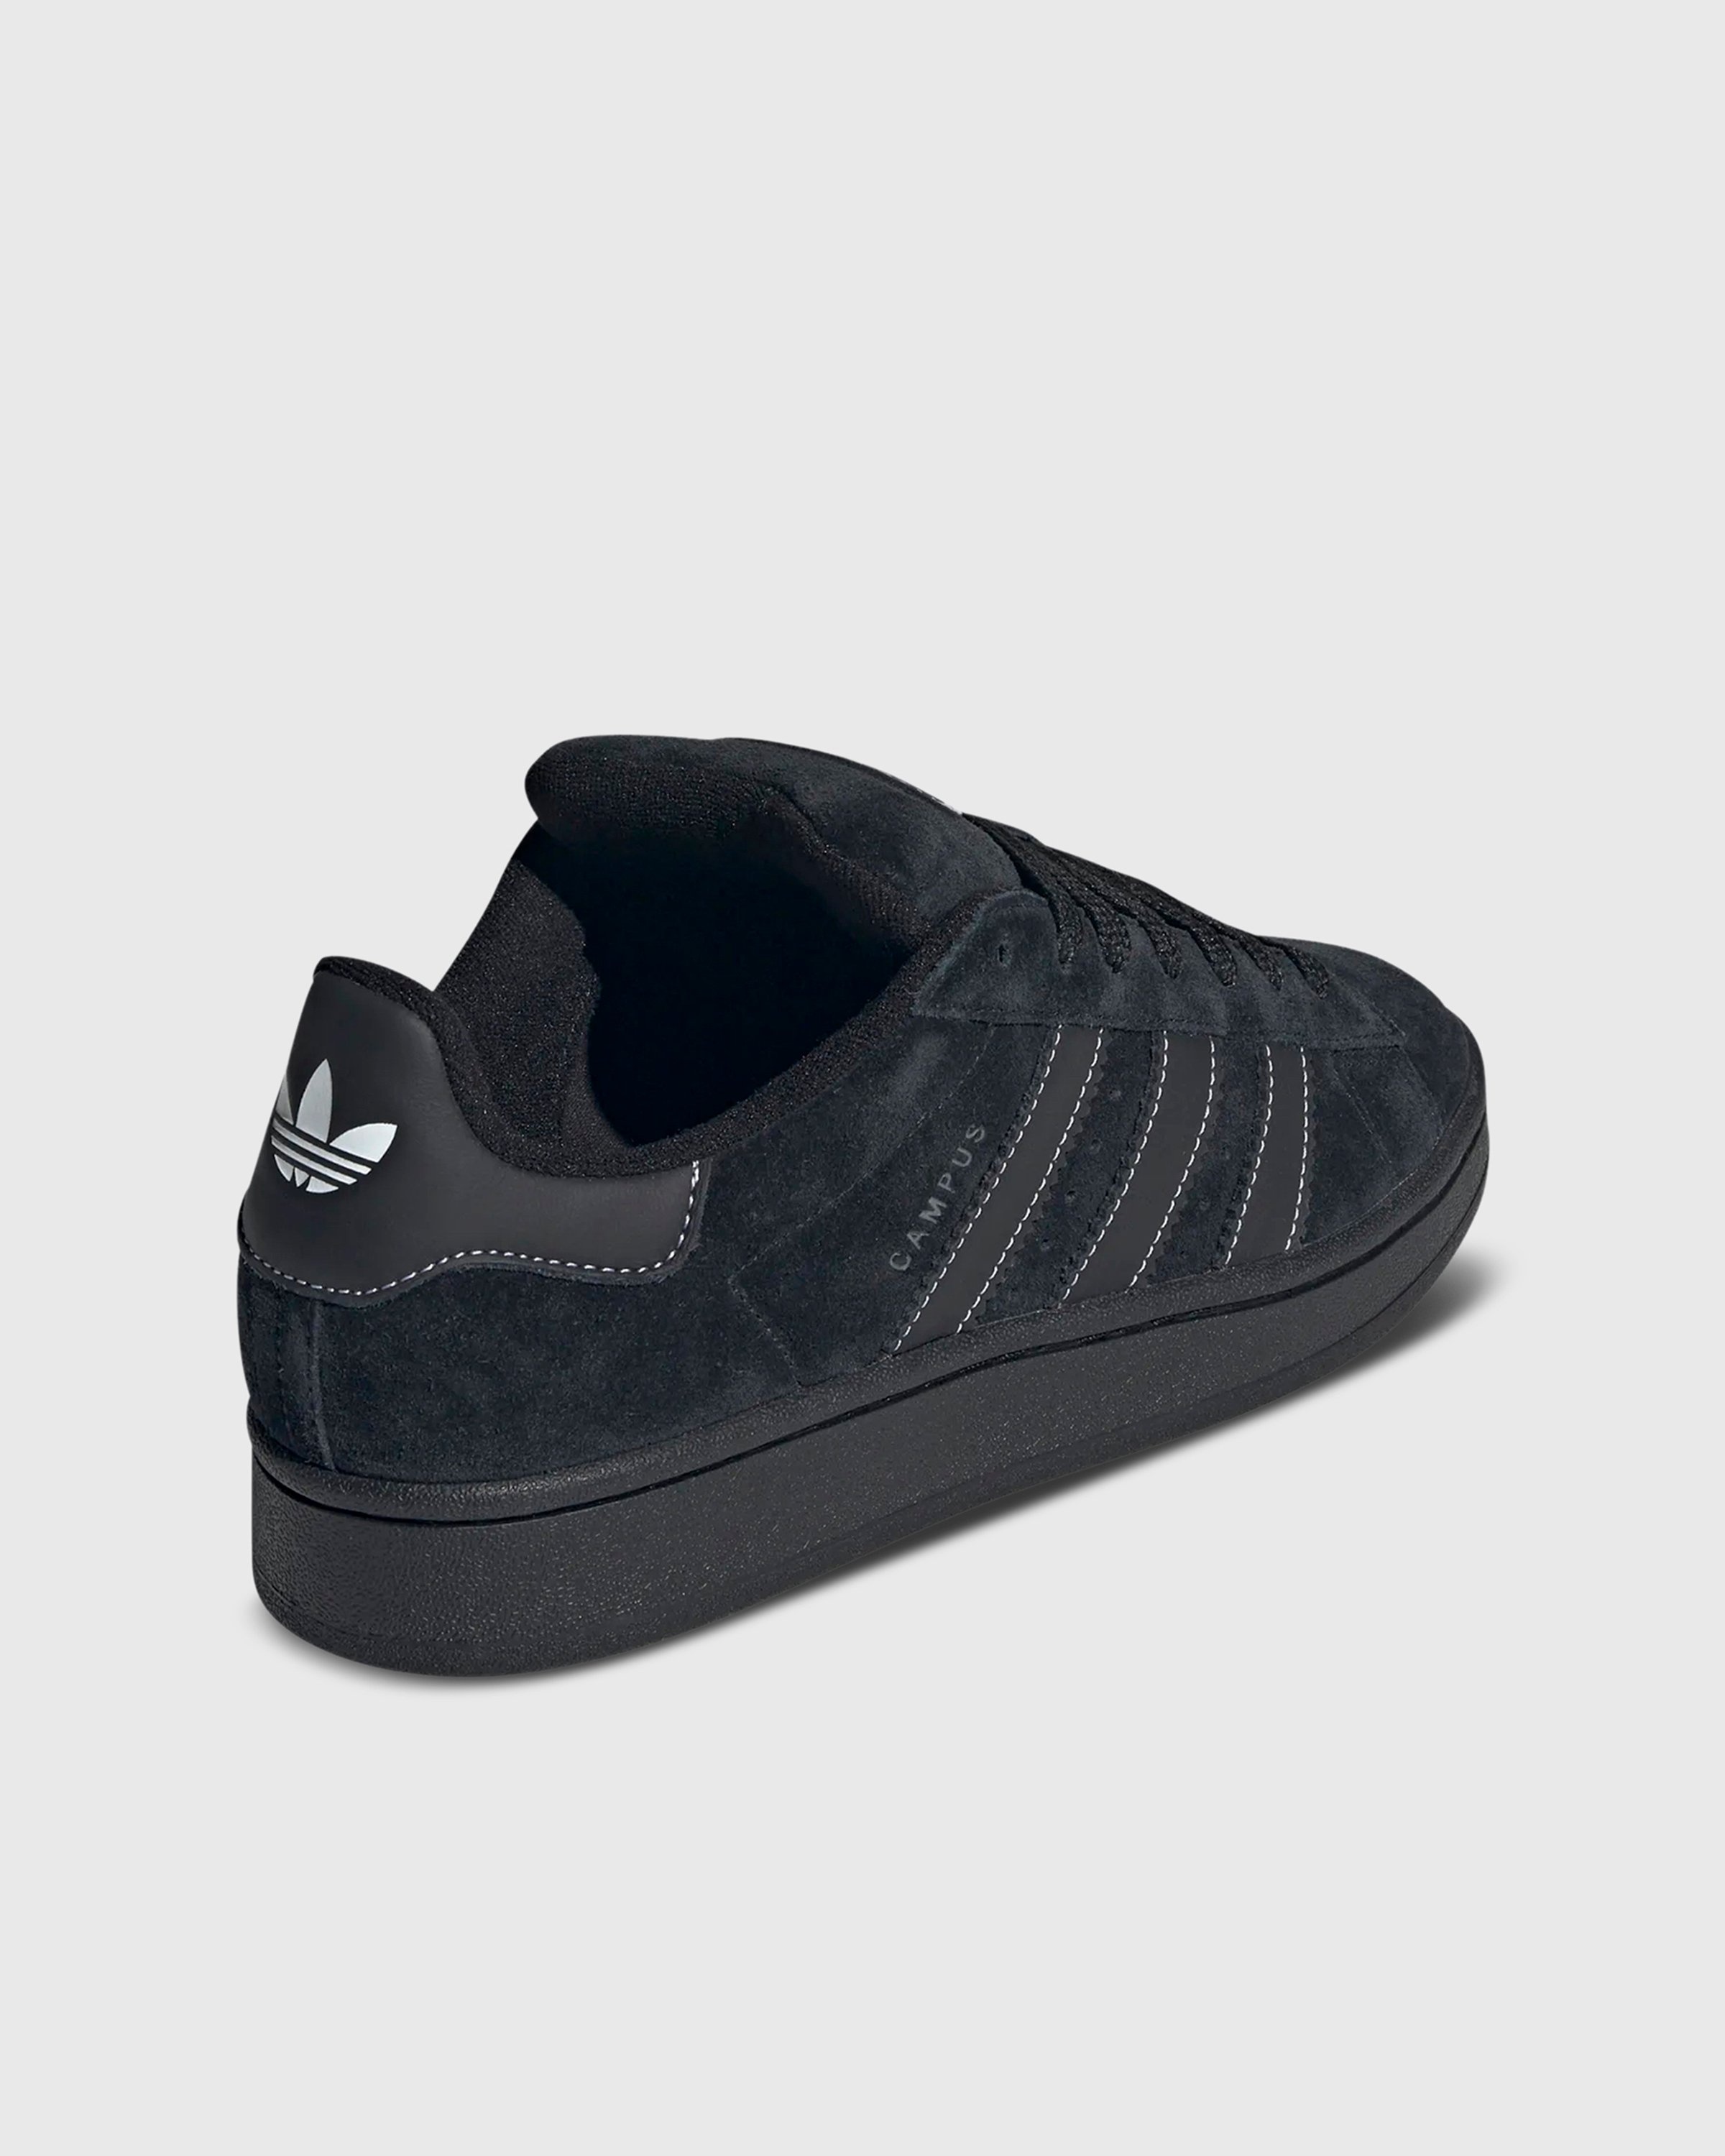 Adidas – Campus 00s Core Black - Low Top Sneakers - Black - Image 3